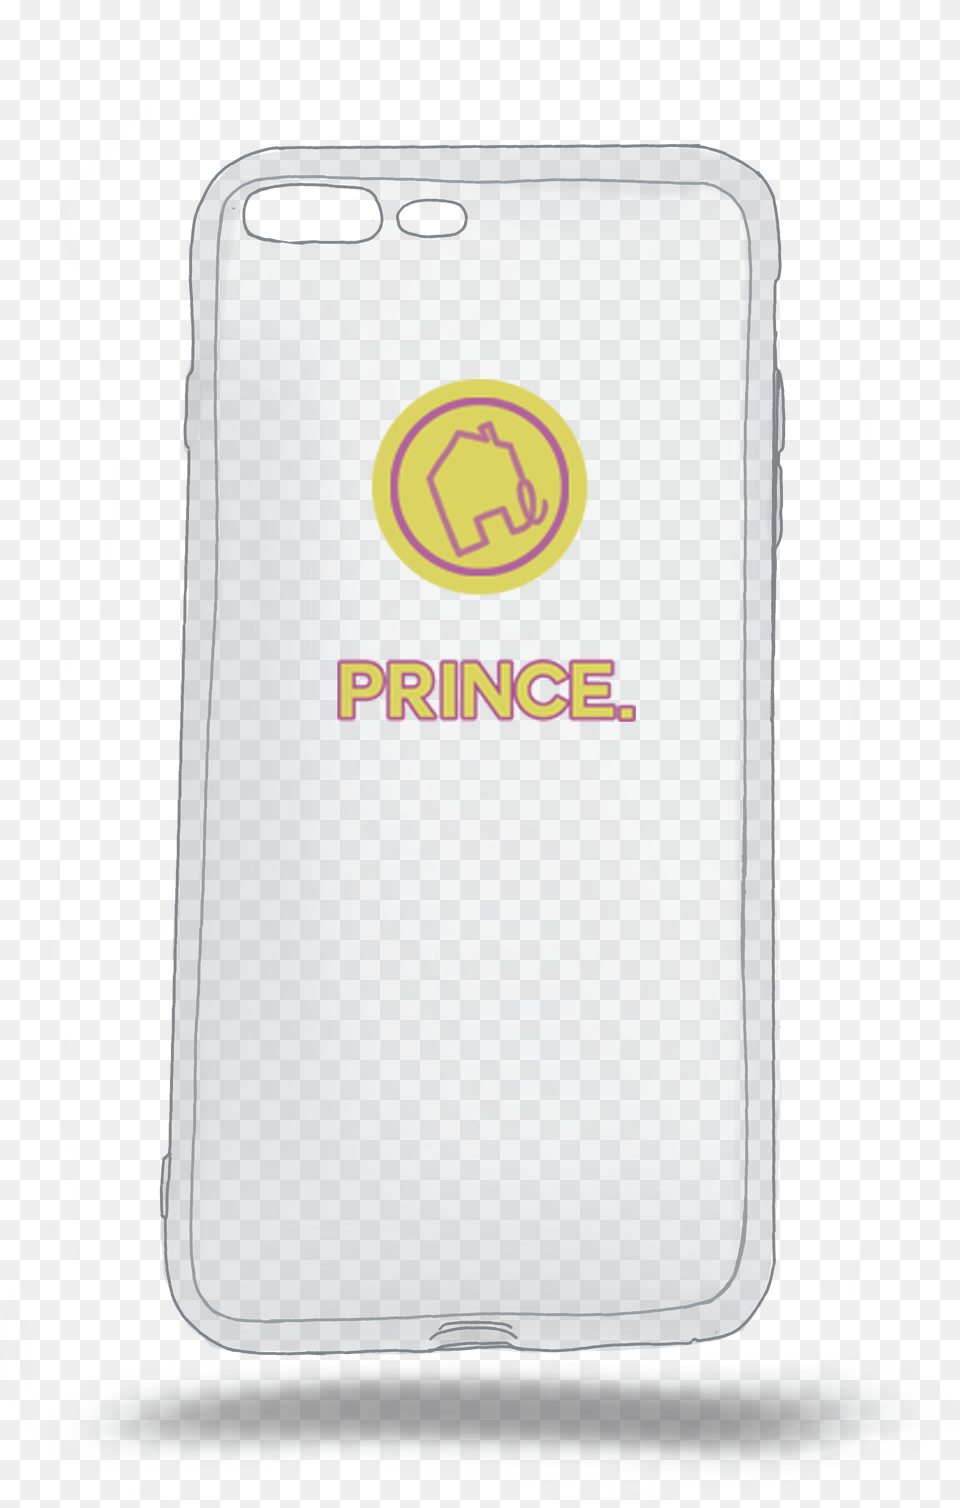 Image Of Prince Samsung Galaxy, Electronics, Mobile Phone, Phone, Bag Png